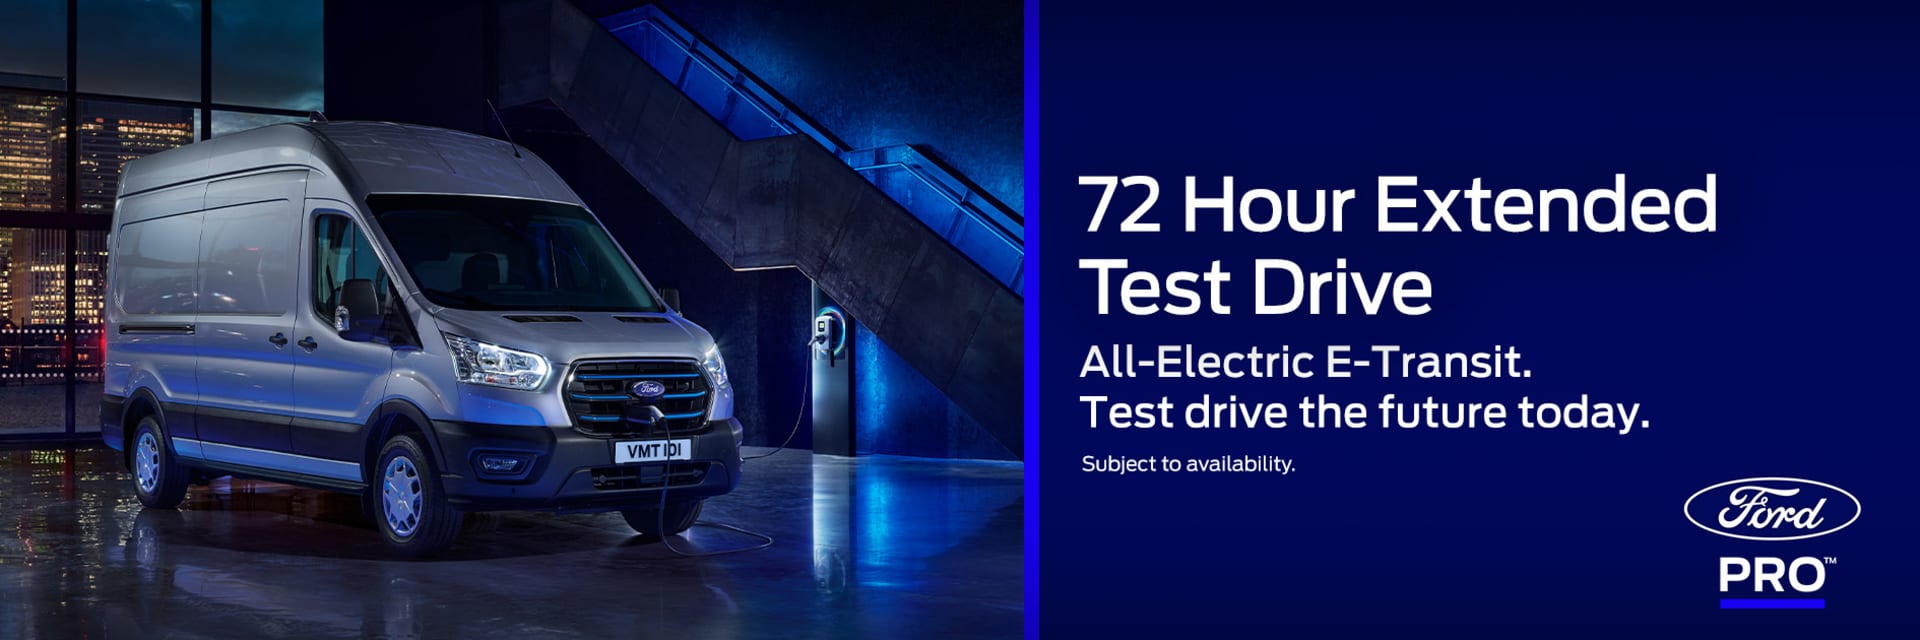 72-hour test drive